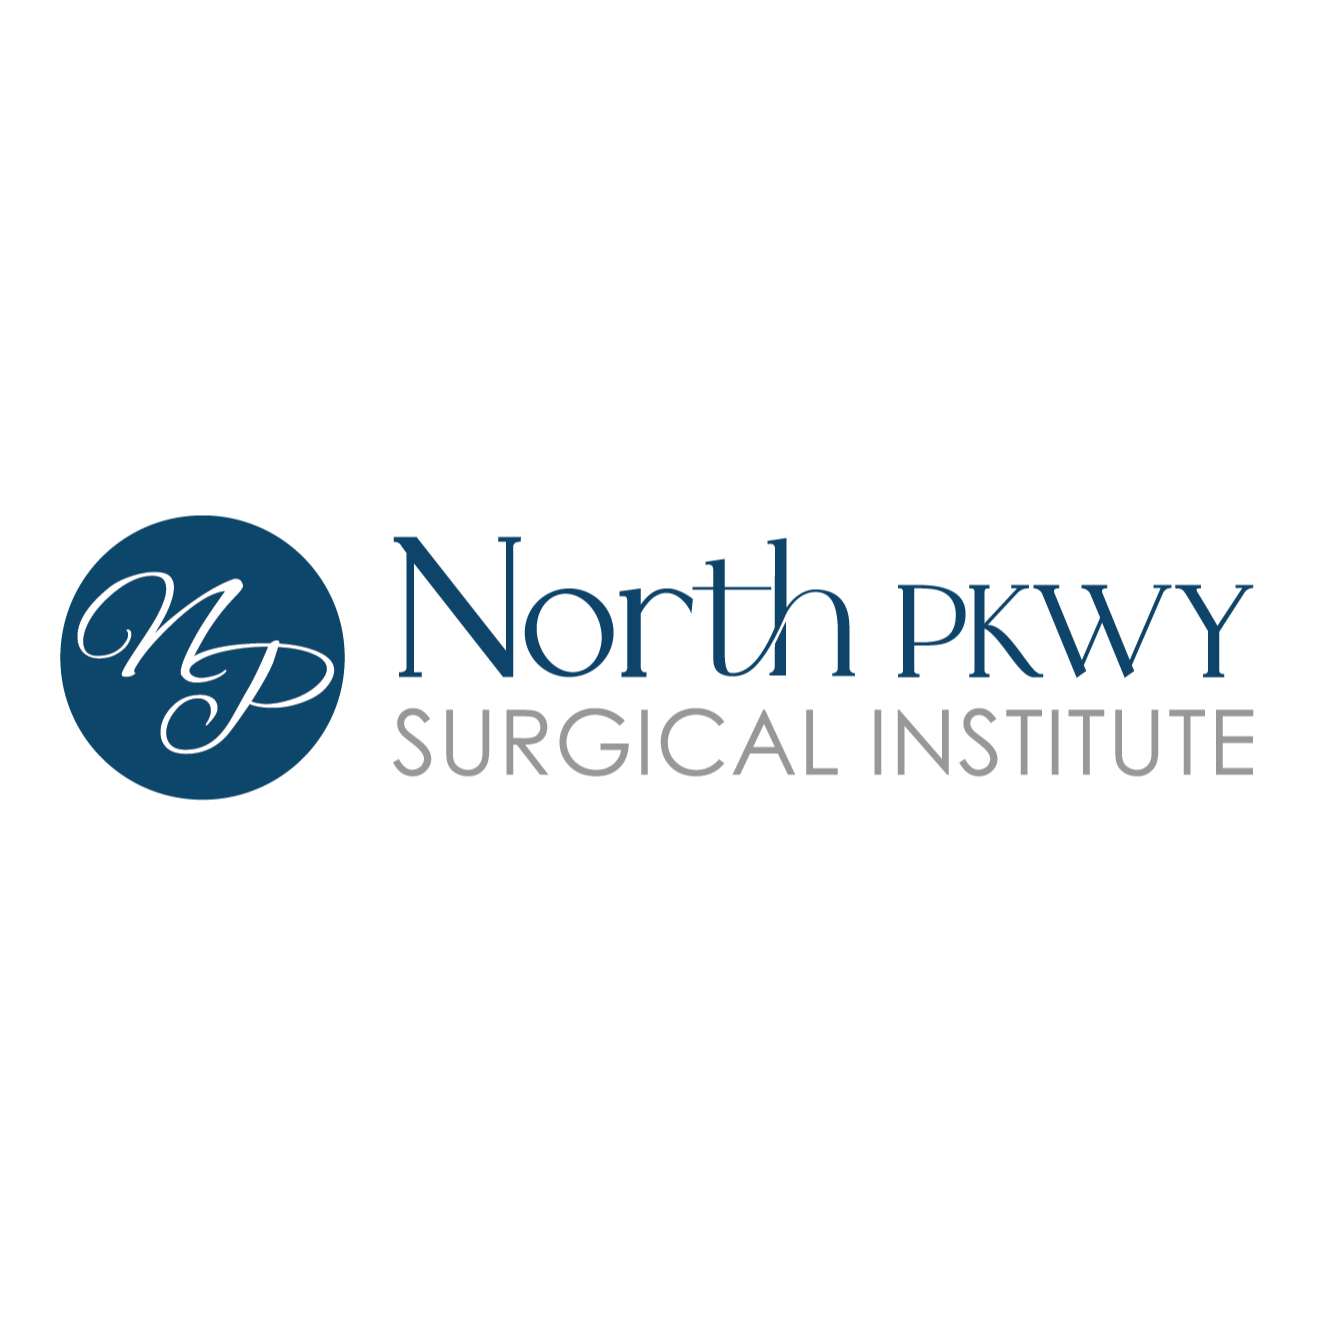 North PKWY Surgical Institute - Dallas, TX 75231 - (972)884-4400 | ShowMeLocal.com